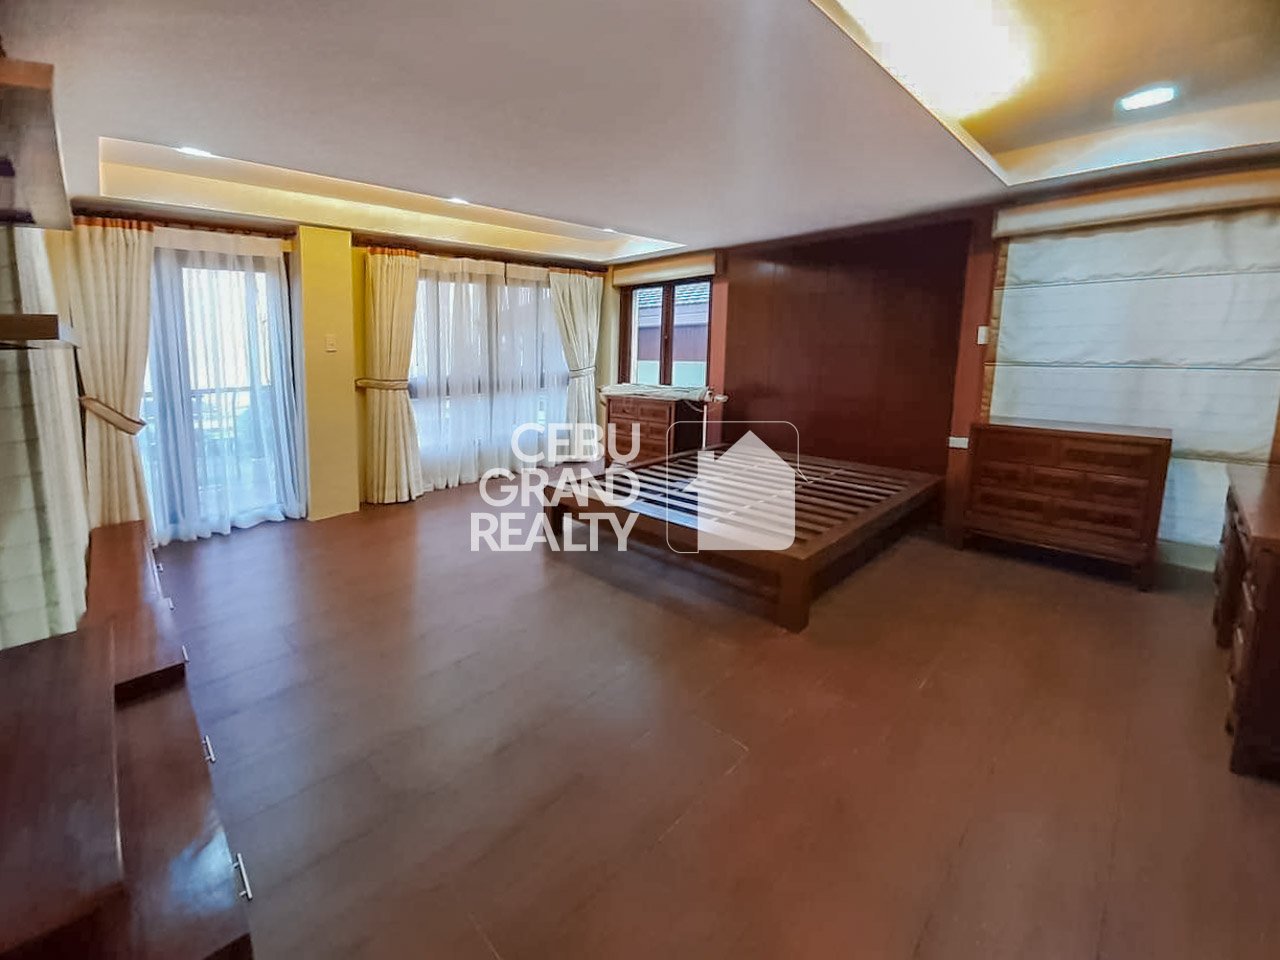 SRBAM3 6 Bedroom House for Sale in Amara Liloan - Cebu Grand Realty (12)